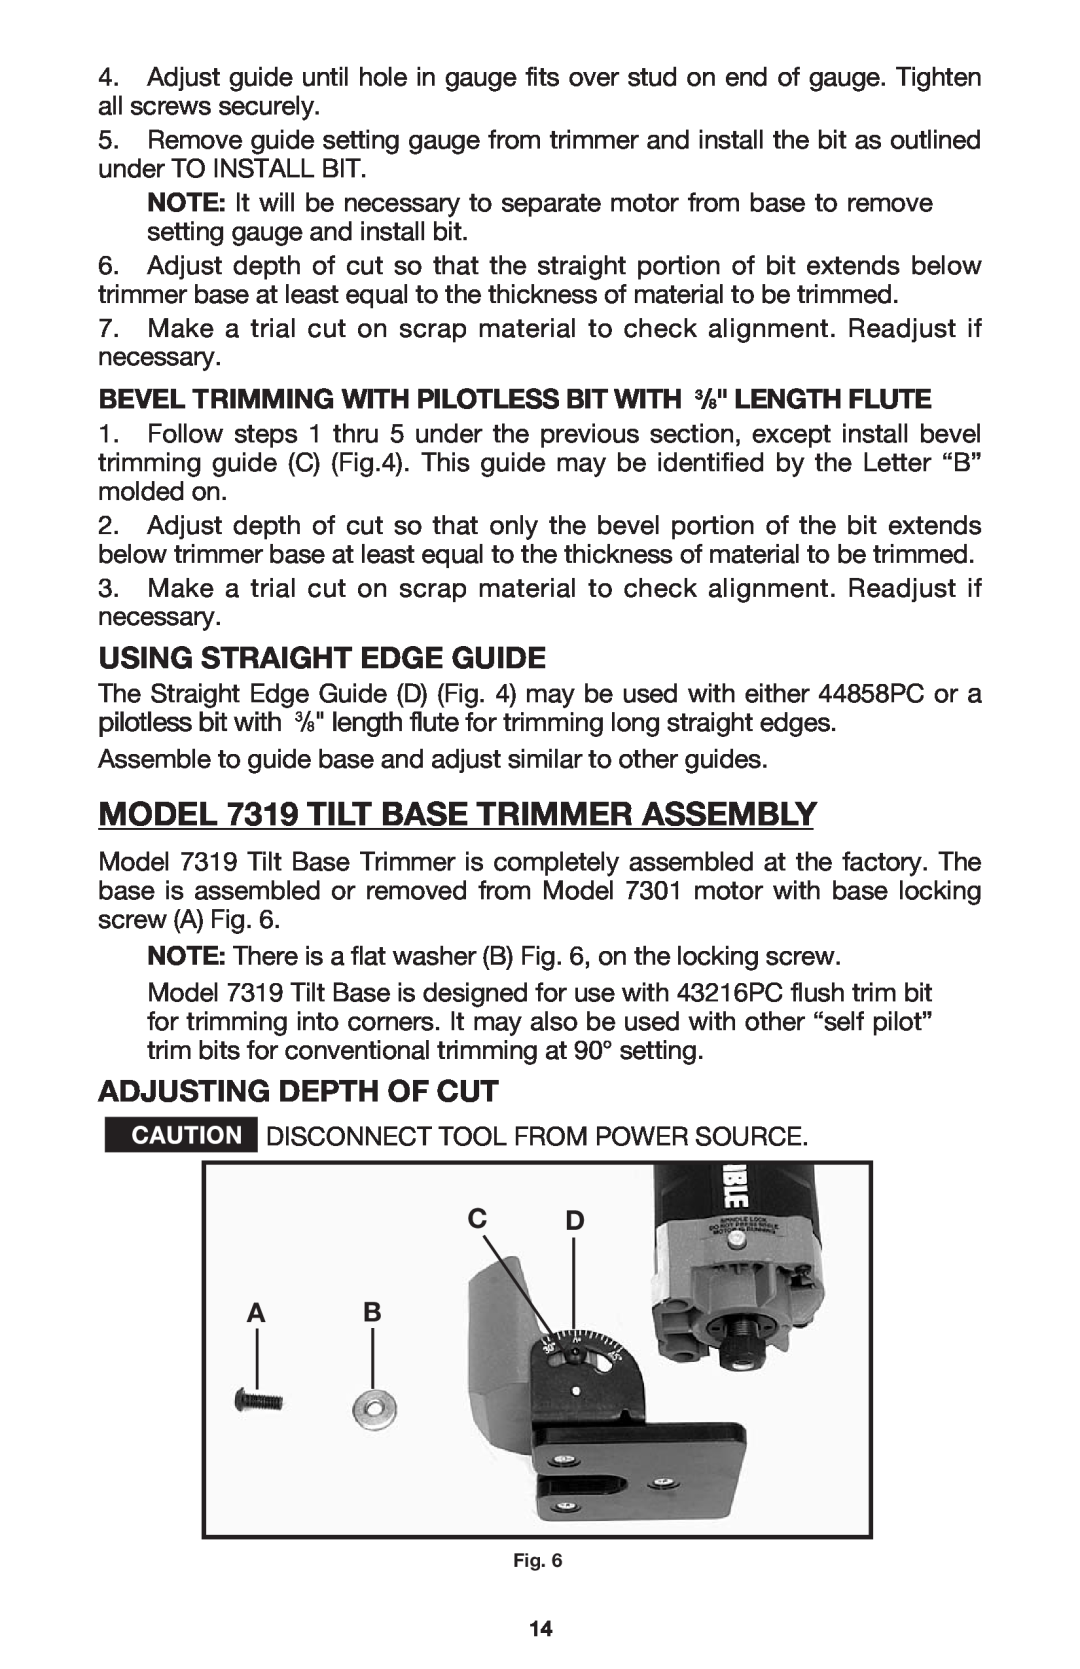 Porter-Cable 7310 MODEL 7319 TILT BASE TRIMMER ASSEMBLY, Using Straight Edge Guide, C D A B, Adjusting Depth Of Cut 